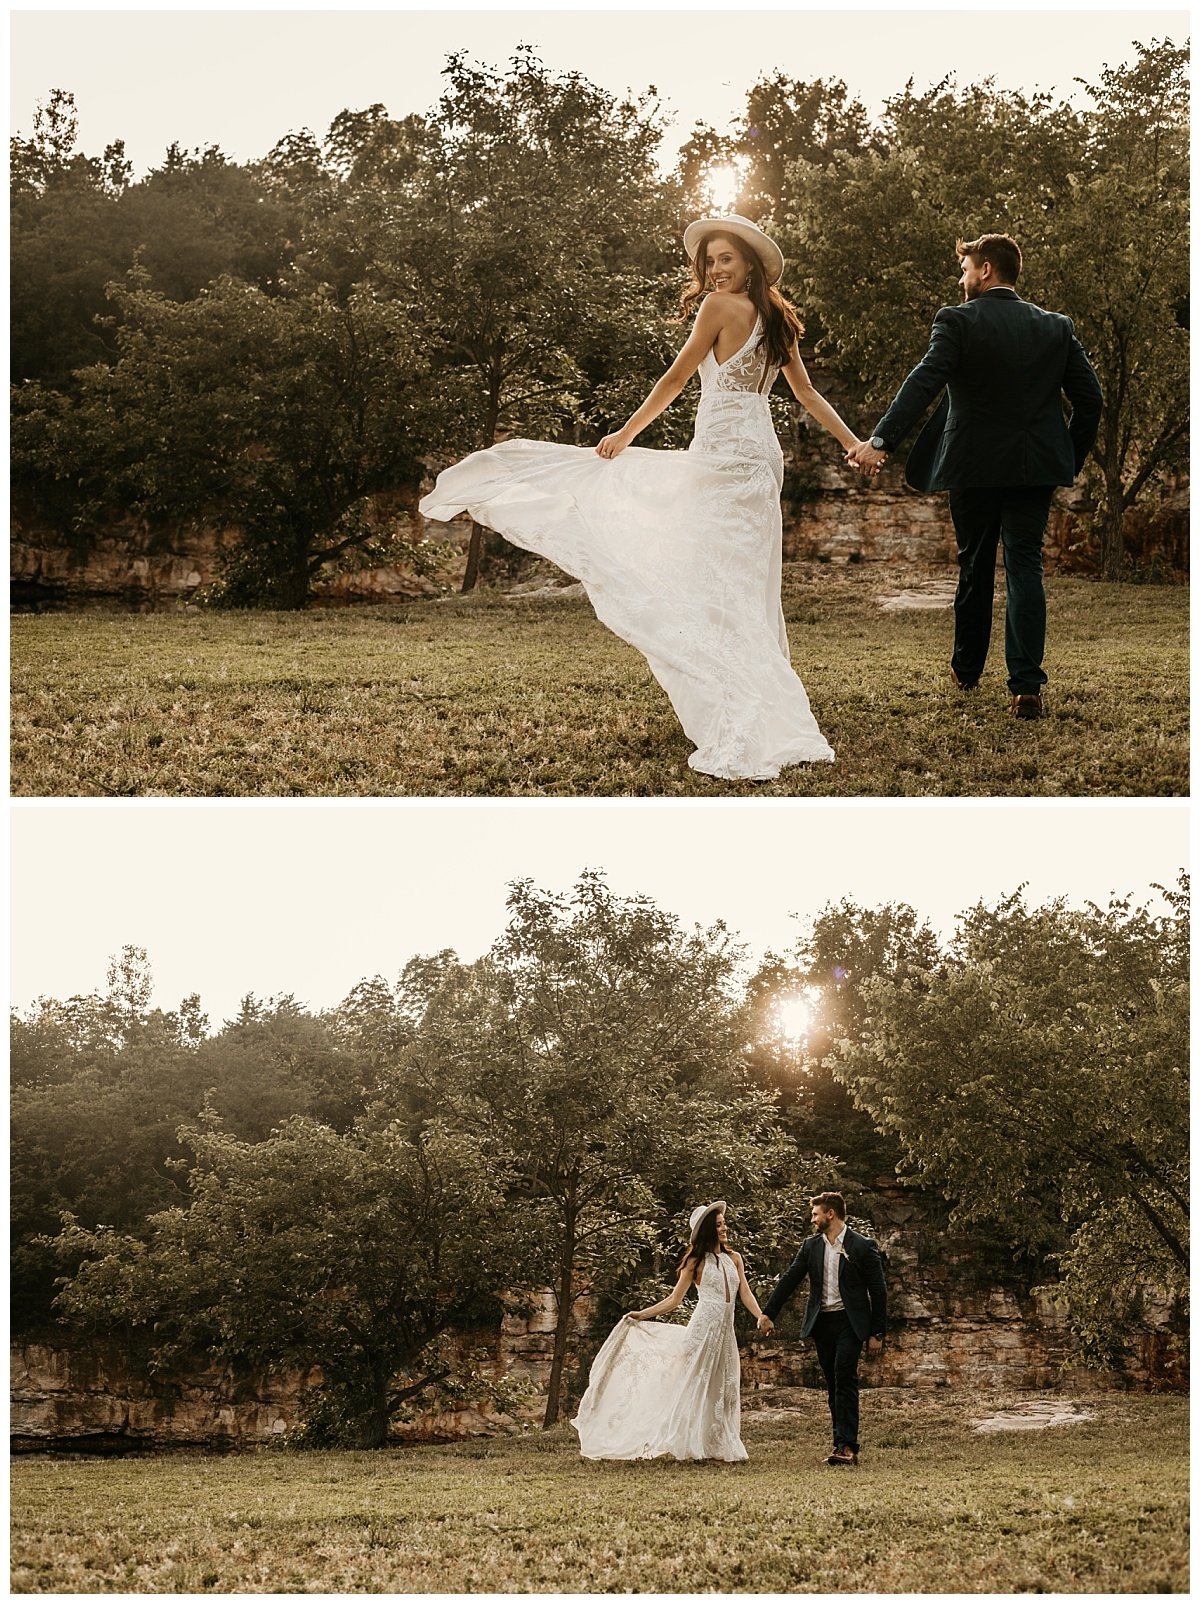 Boho+Elopement+_+Kansas+City+Wedding+Photography+_+Colorado+Elopement+_+Outdoor+Wedding+_+Outdoor+Elopement+Photos (20).jpeg